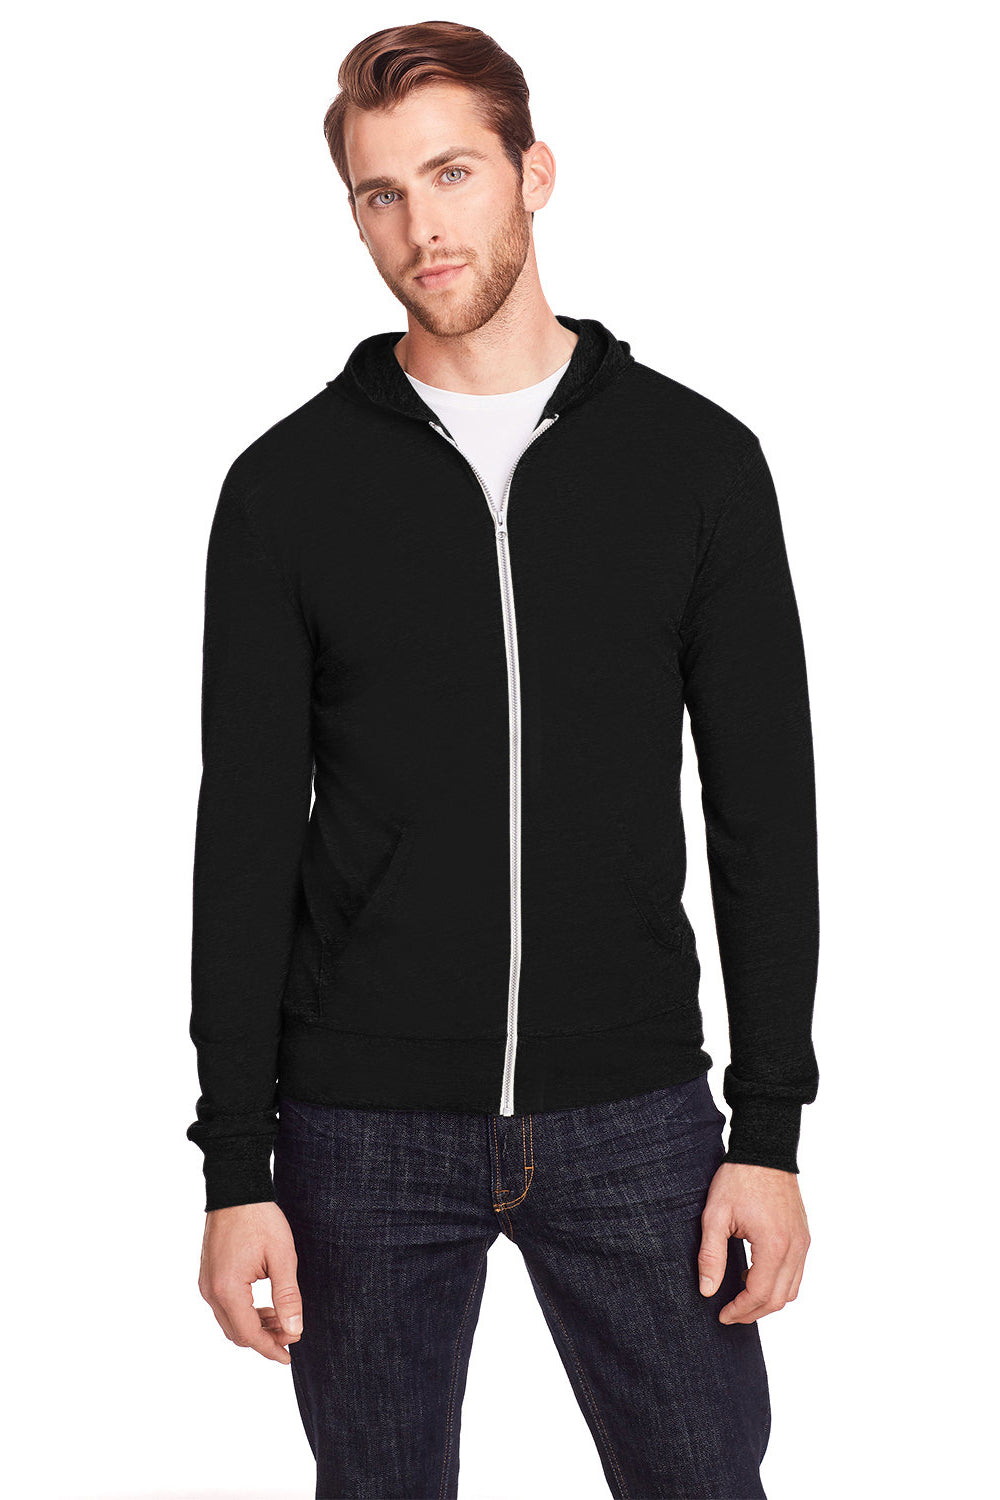 Plain Black Hoodie Jacket with zipper – Cutton Garments